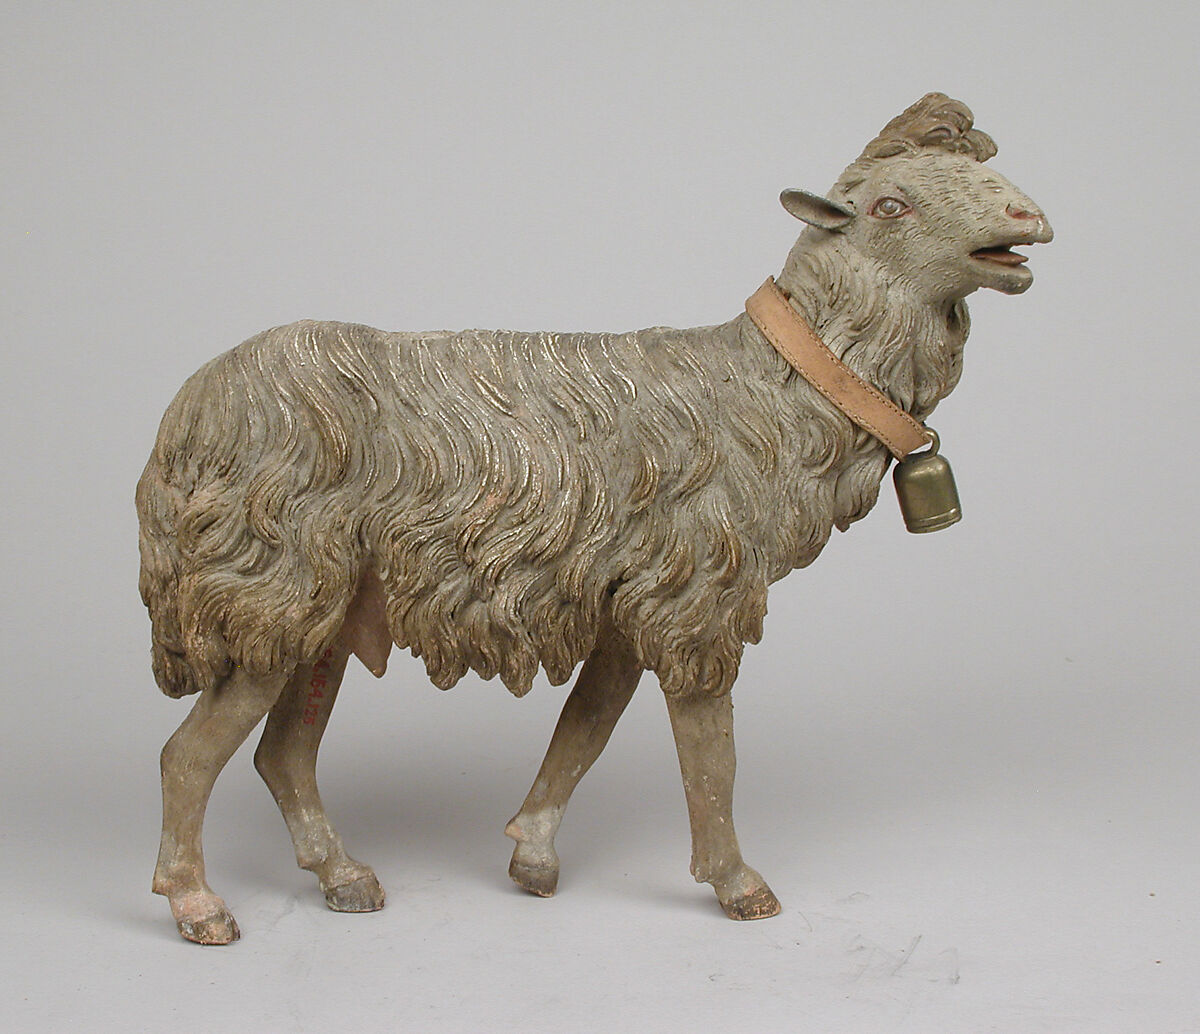 Standing sheep, Polychromed terracotta body, wooden legs, metal ears